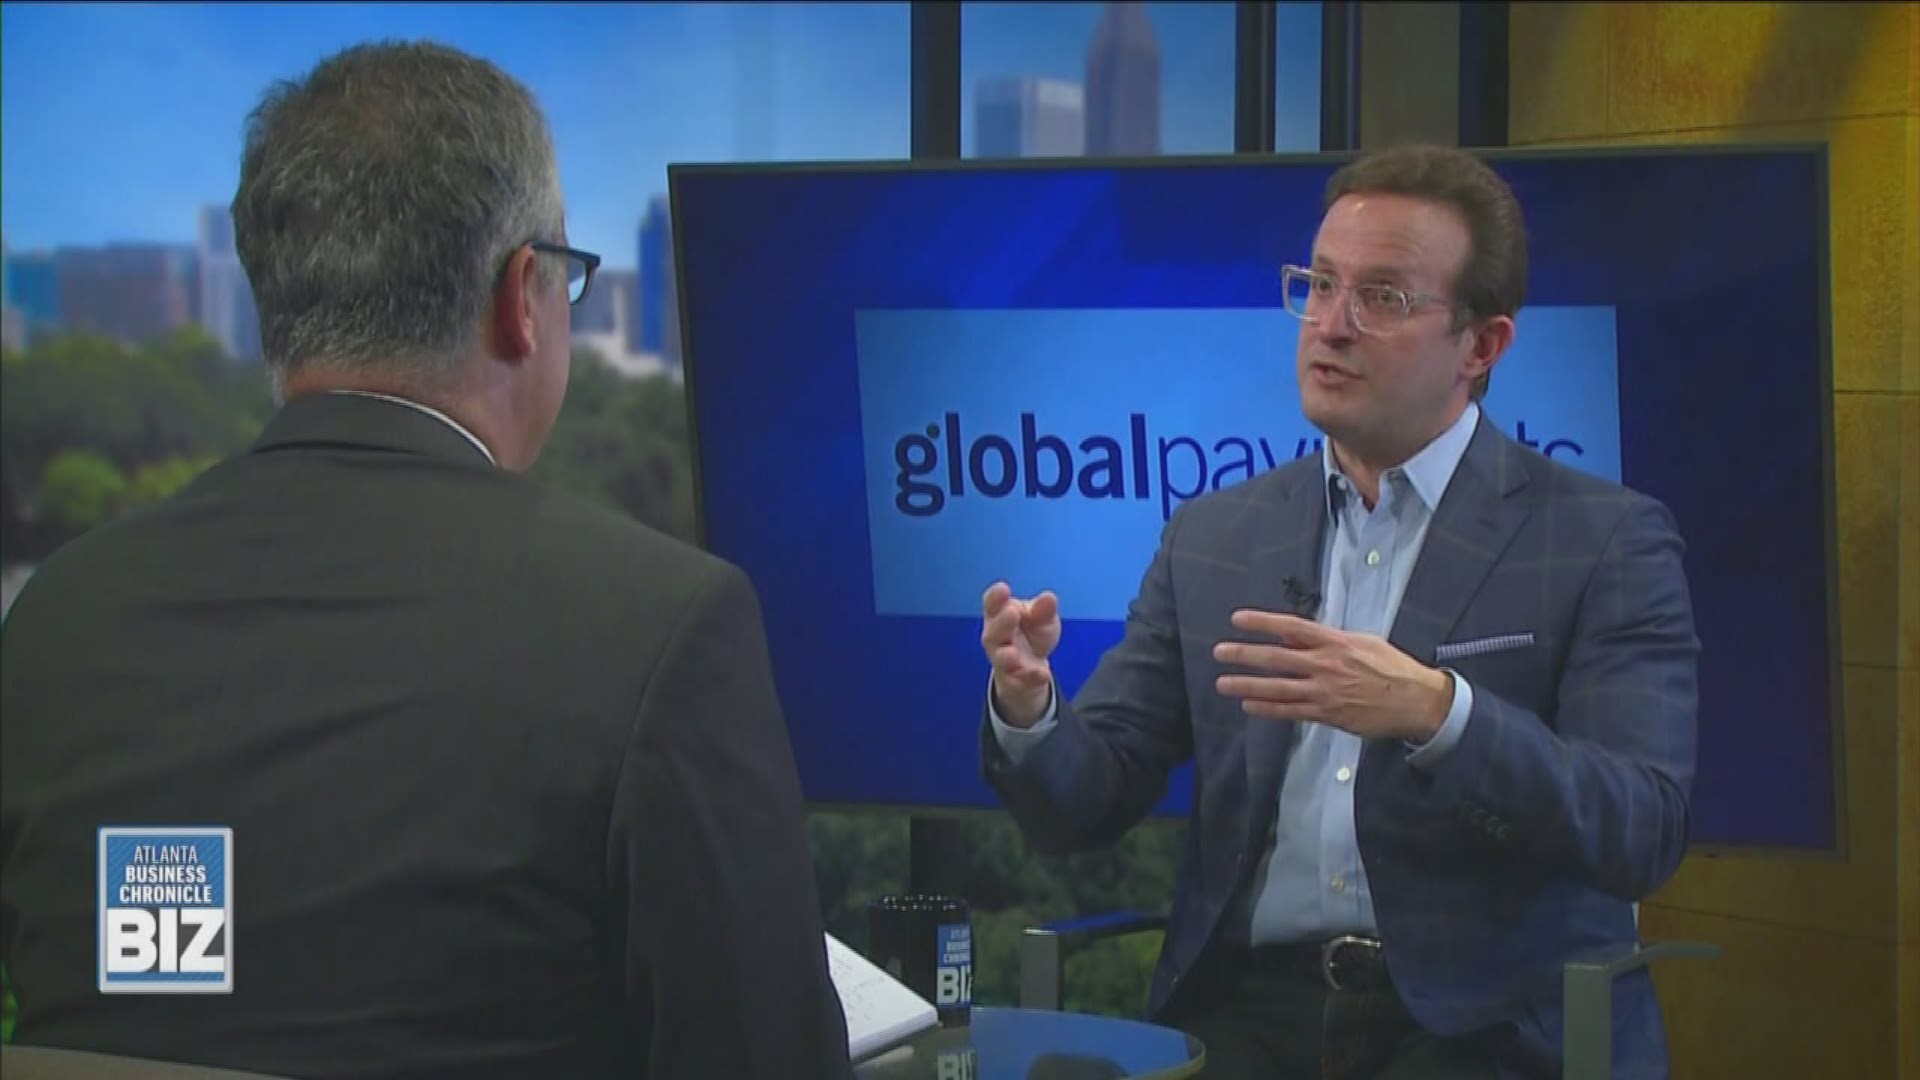 Global Payments CEO Jeff Sloan joins David Rubinger on 'Atlanta Business Chronicle's BIZ'